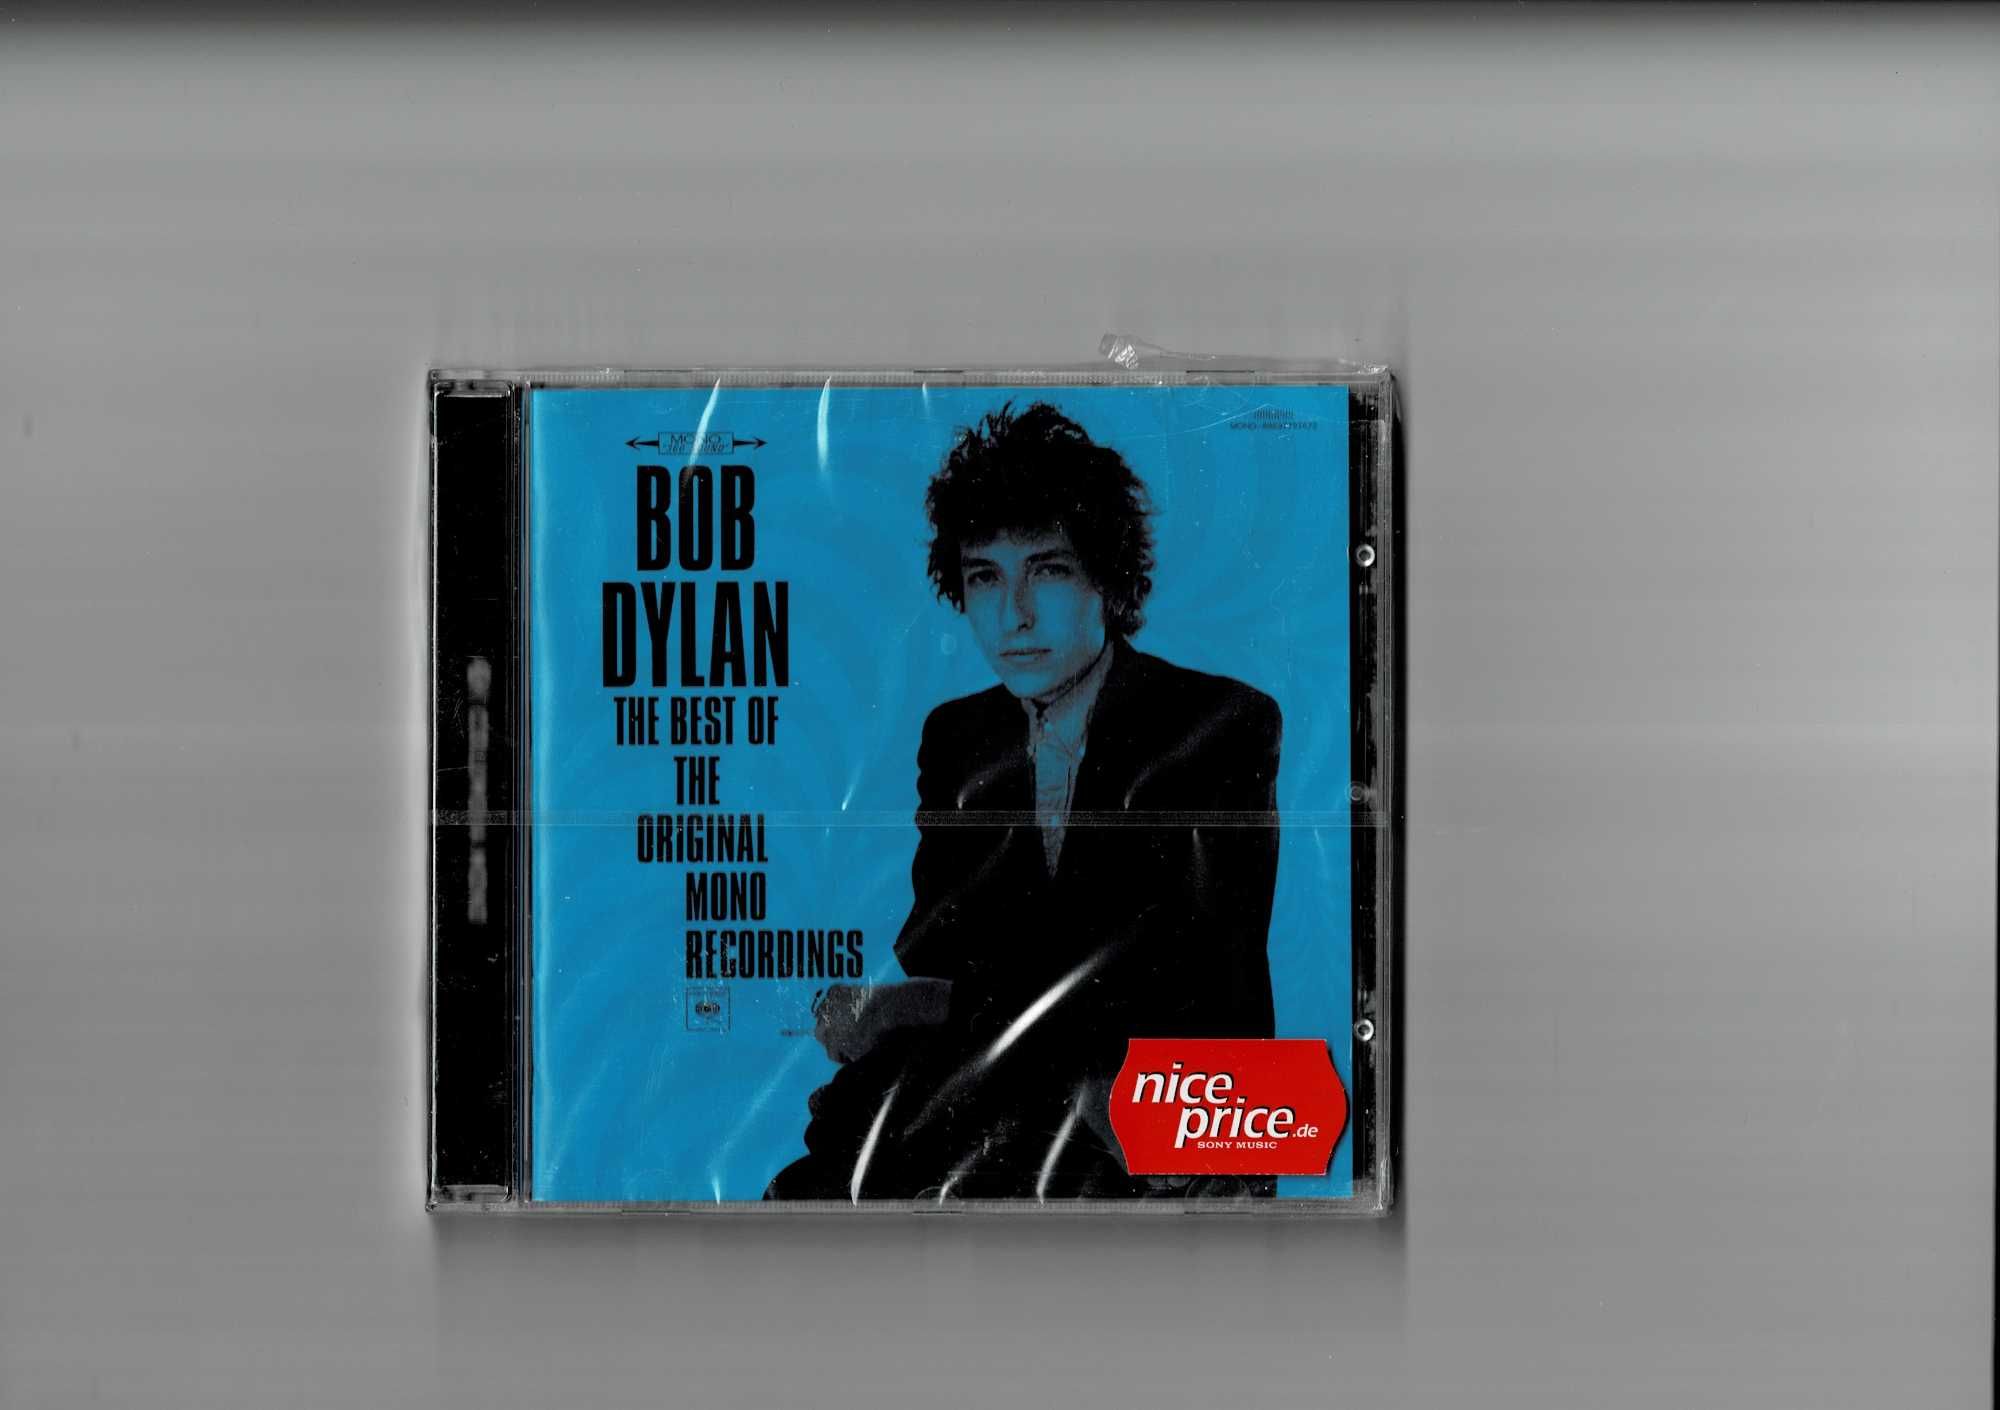 BOB DYLAN The Best Of The Original Mono Recordings CD 2010 Nowa Folia